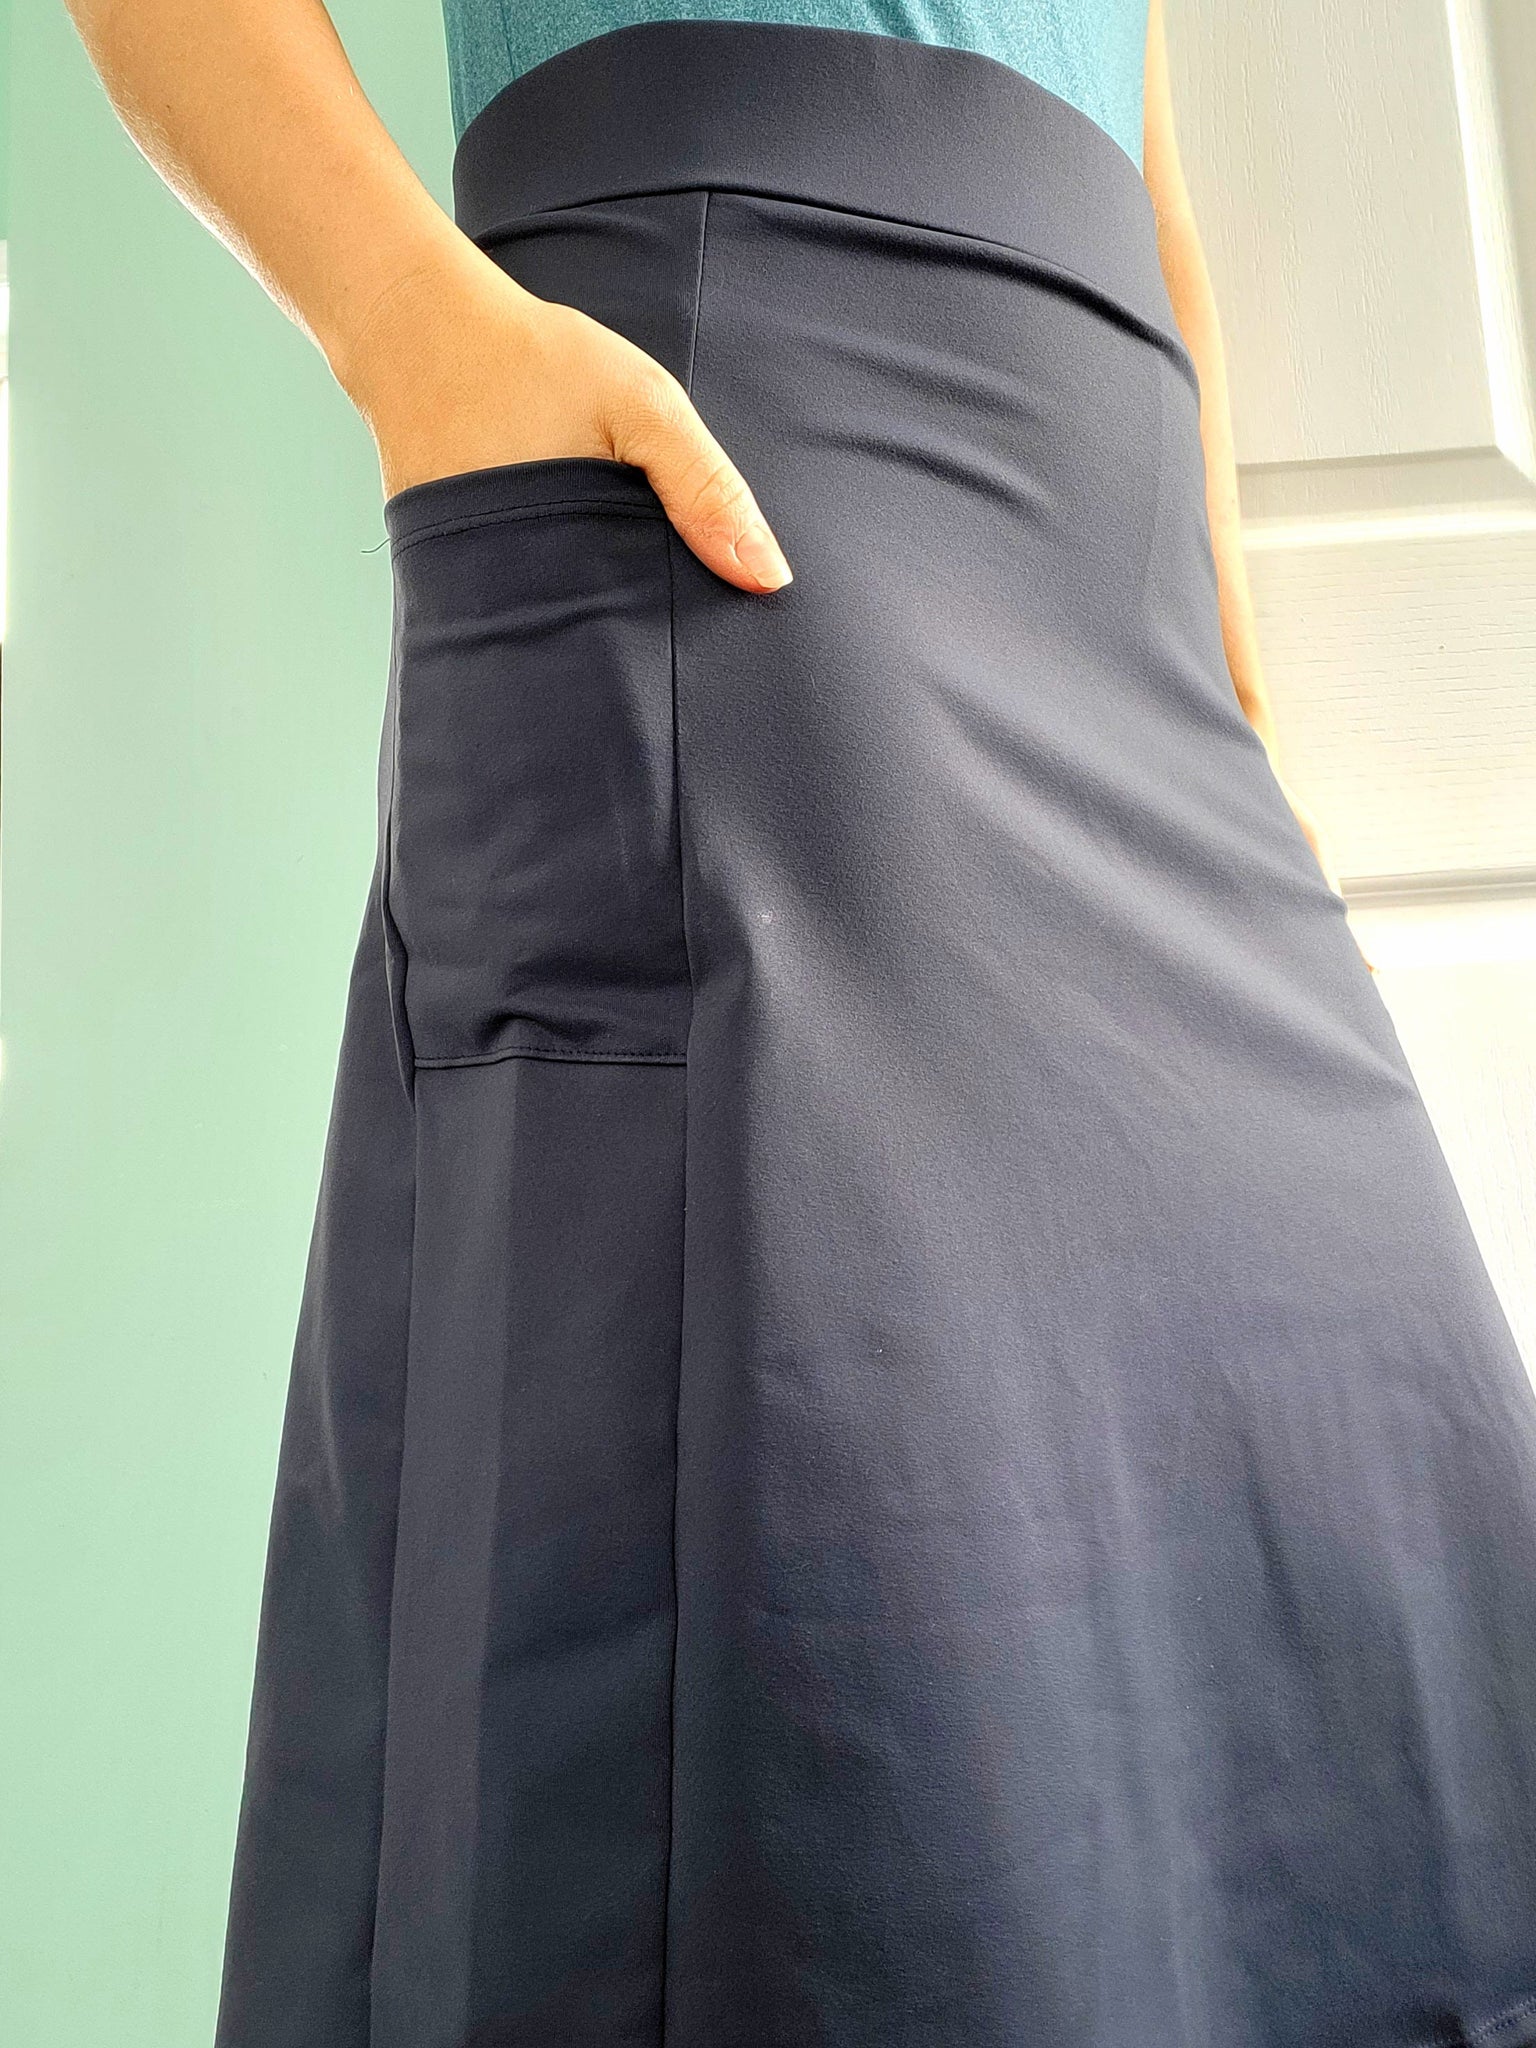 Size Medium Side Pocket Style Athletic Skirt in Navy with Hidden Leggings